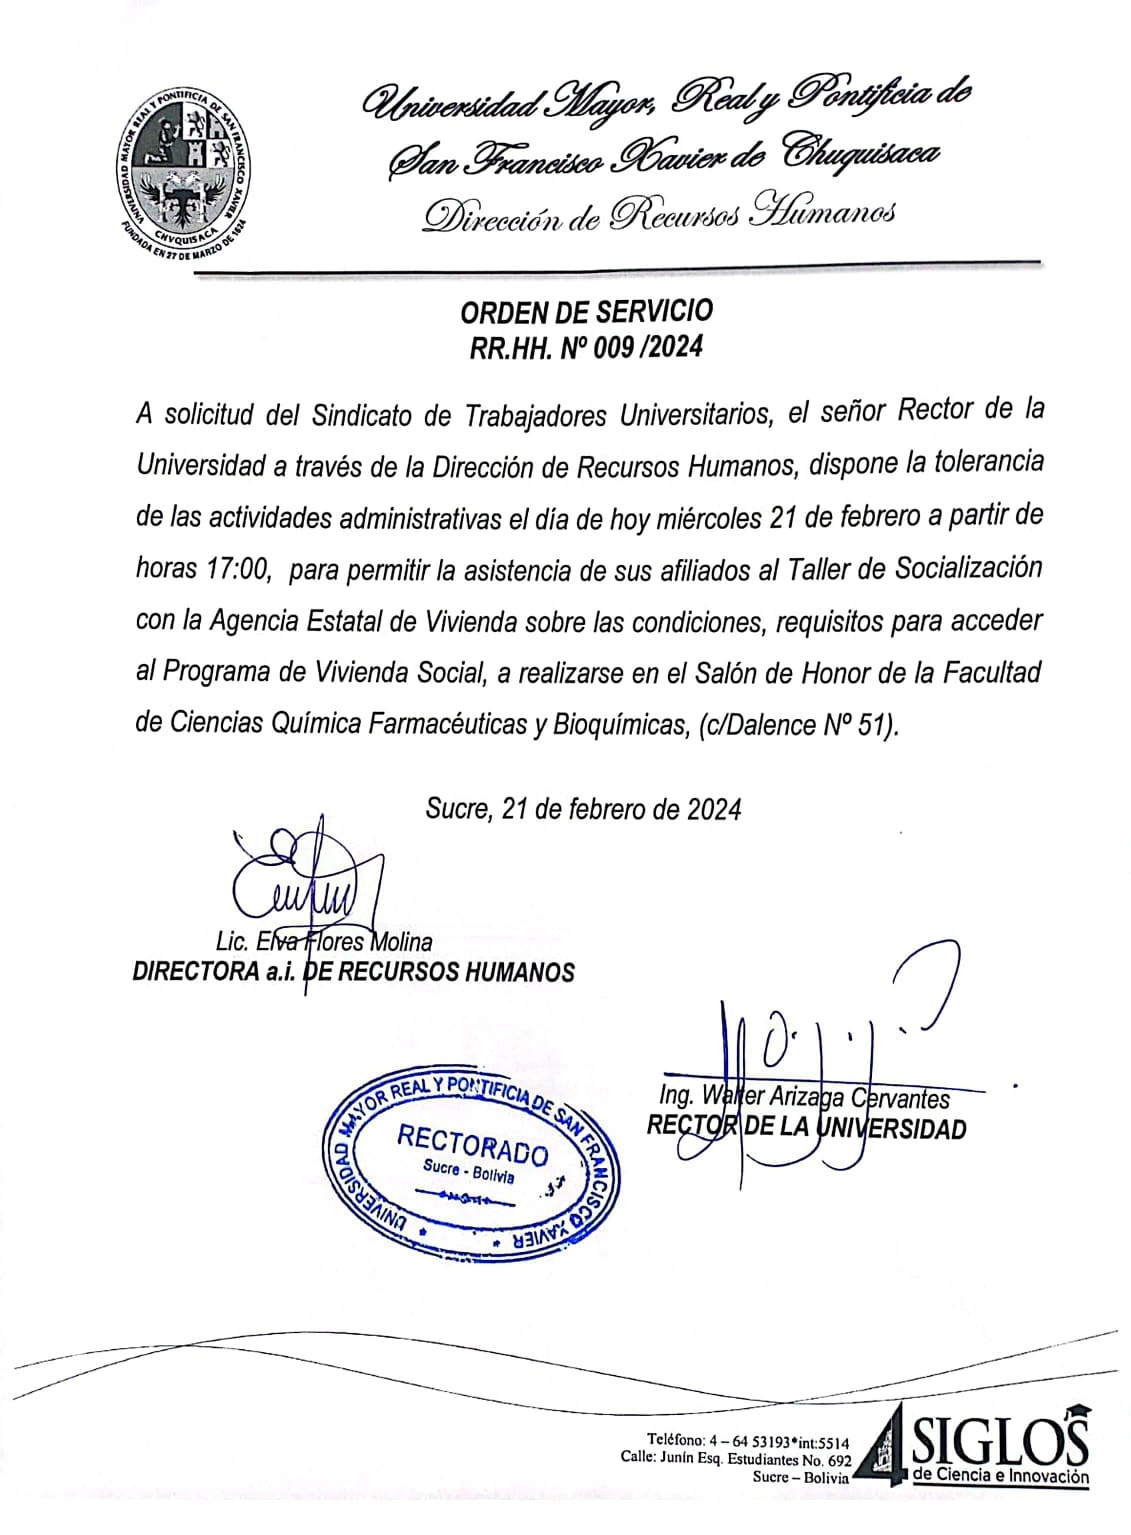 ORDEN DE SERVICIO RR.HH. Nº 009/2024, TOLERANCIA ACTIVIDADES ADMINISTRATIVAS TALLER AGENCIA ESTATAL DE VIVIENDA.